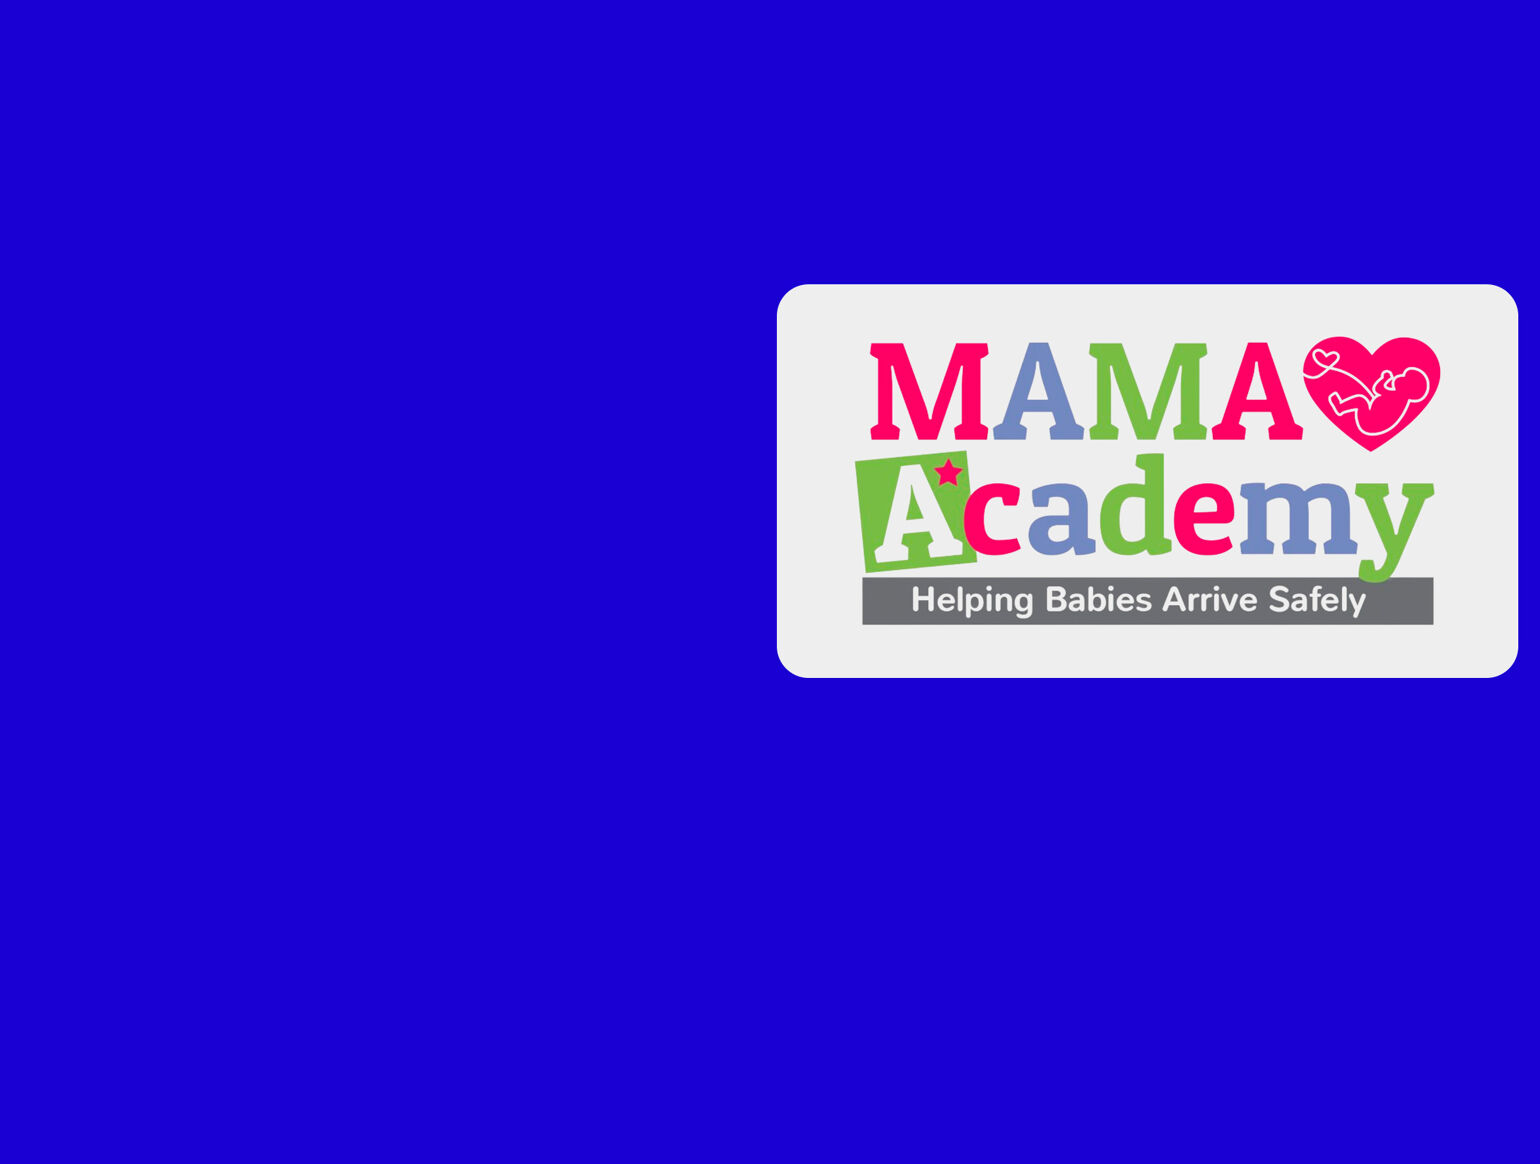 MAMA-Academy